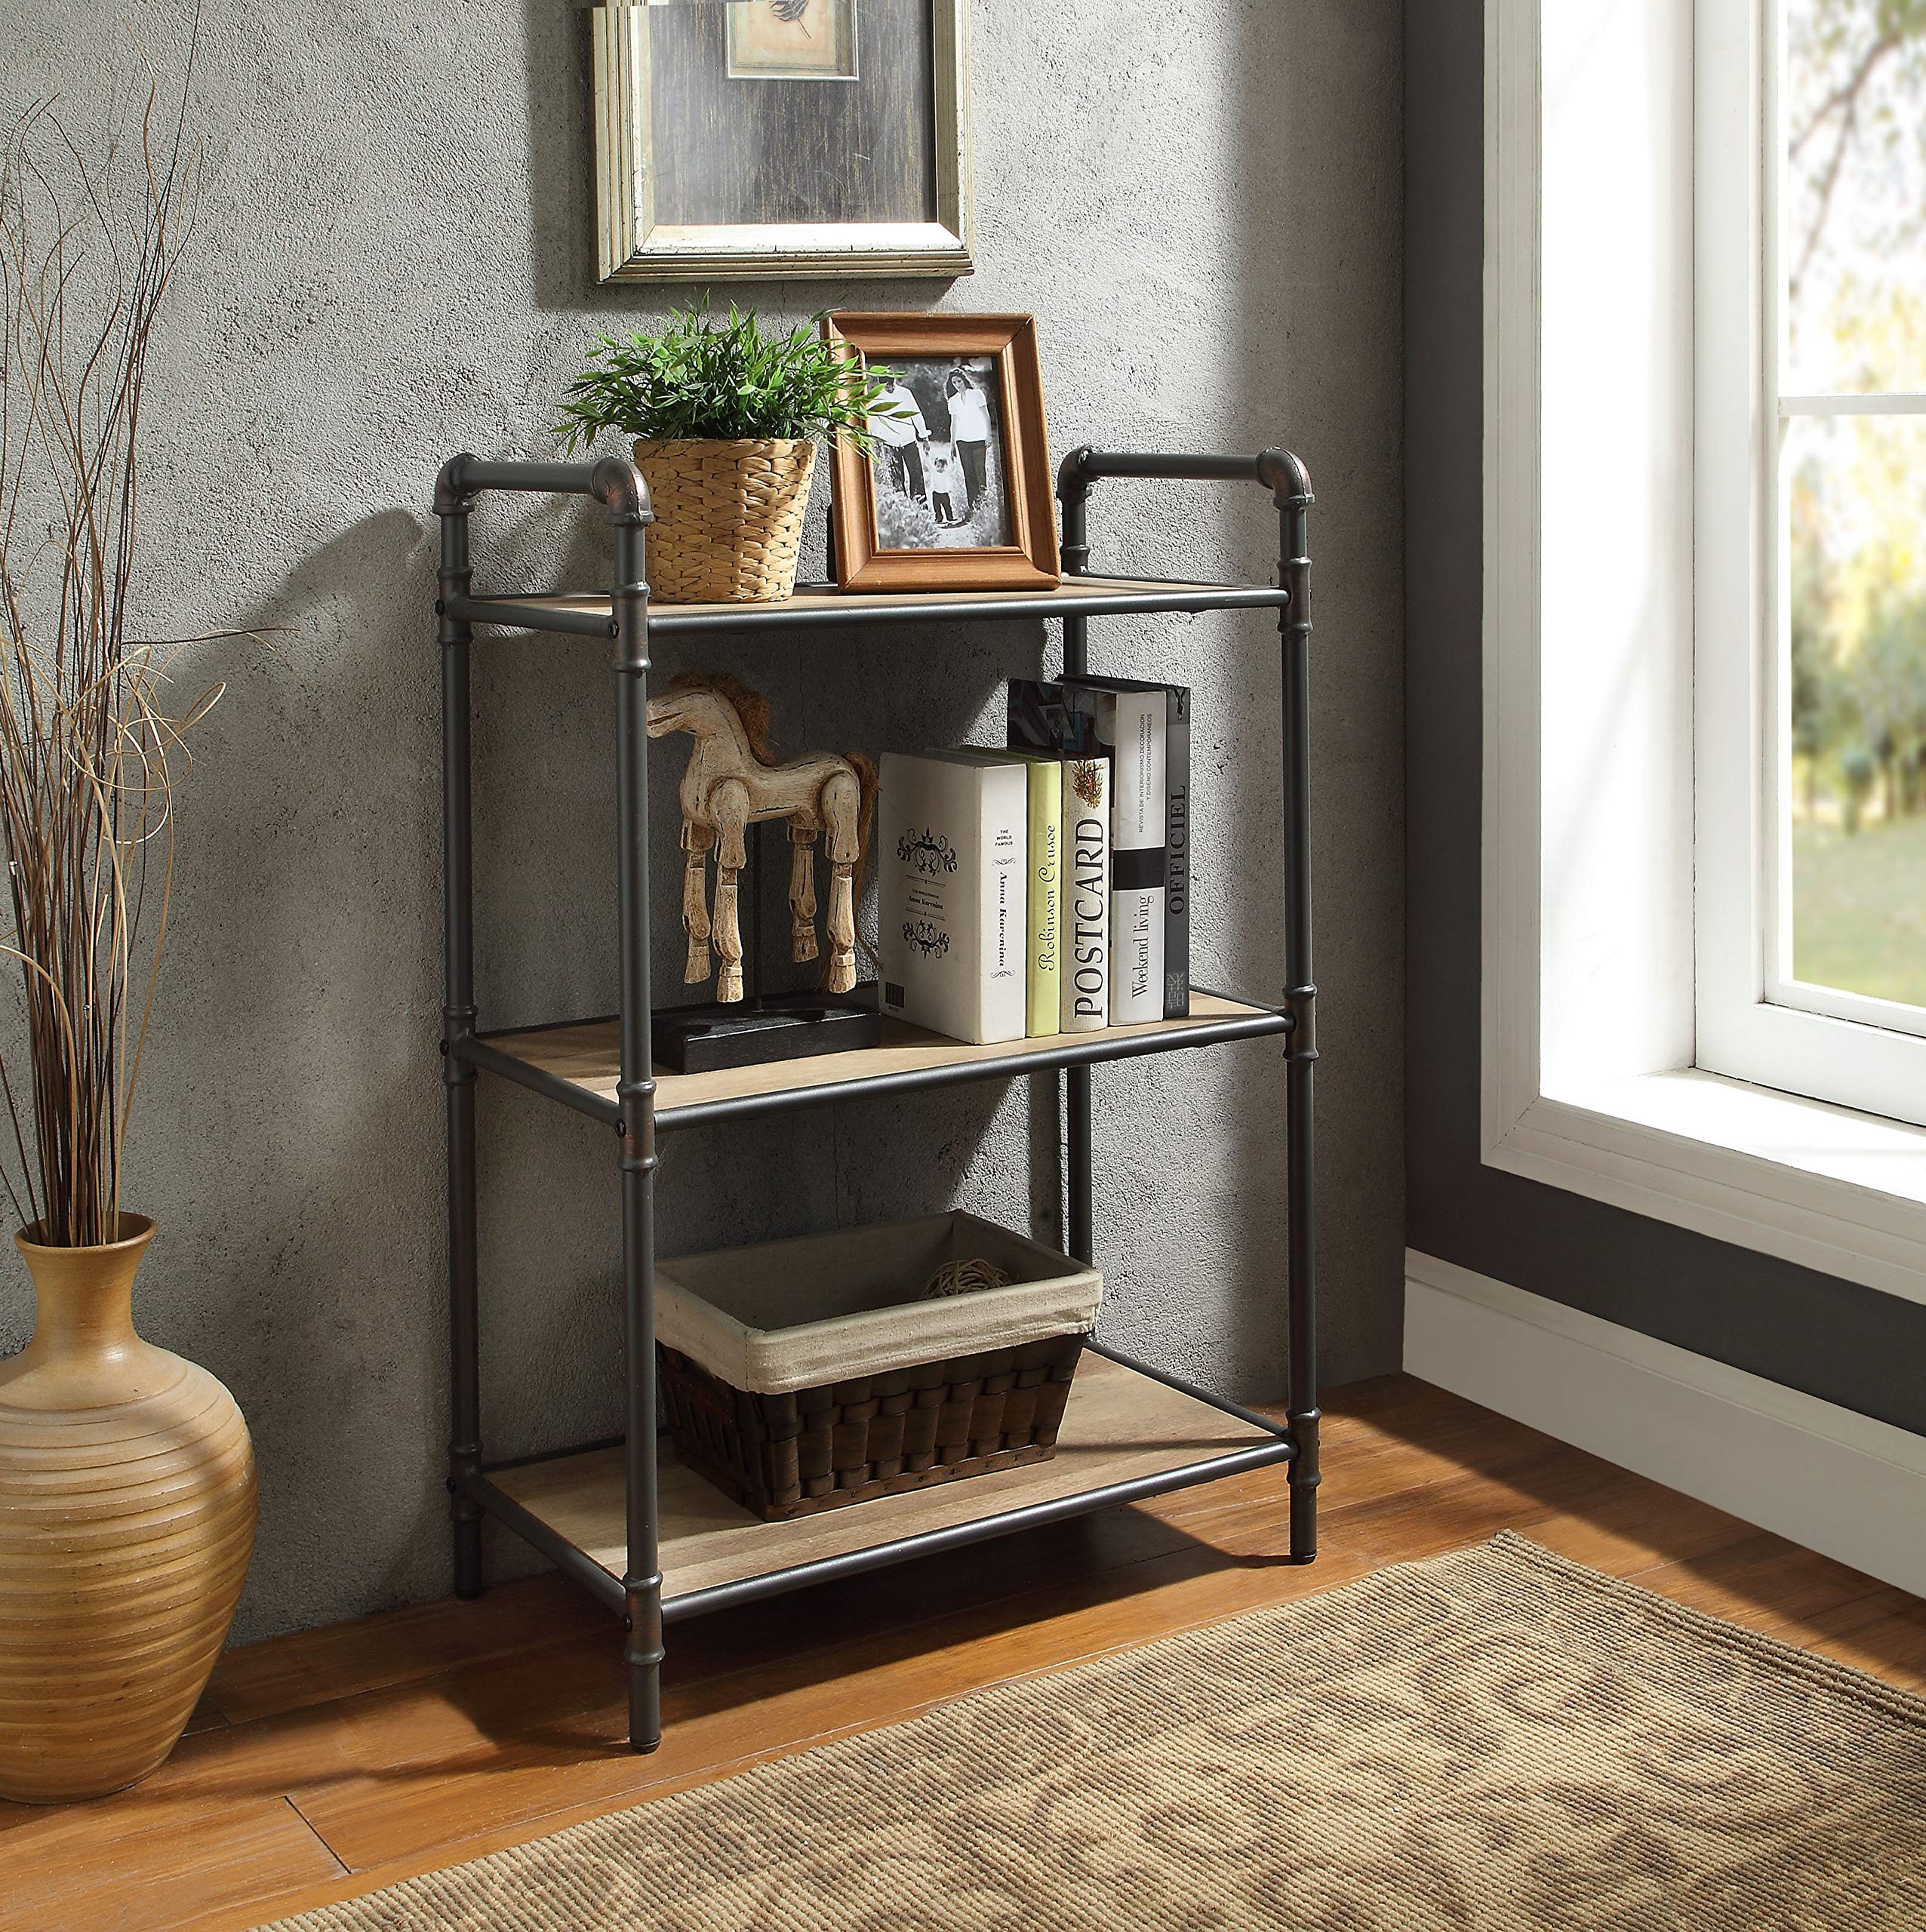 Skyorium Three Tier Metal Bookshelf With Wooden Shelves, Oak Brown & Gray